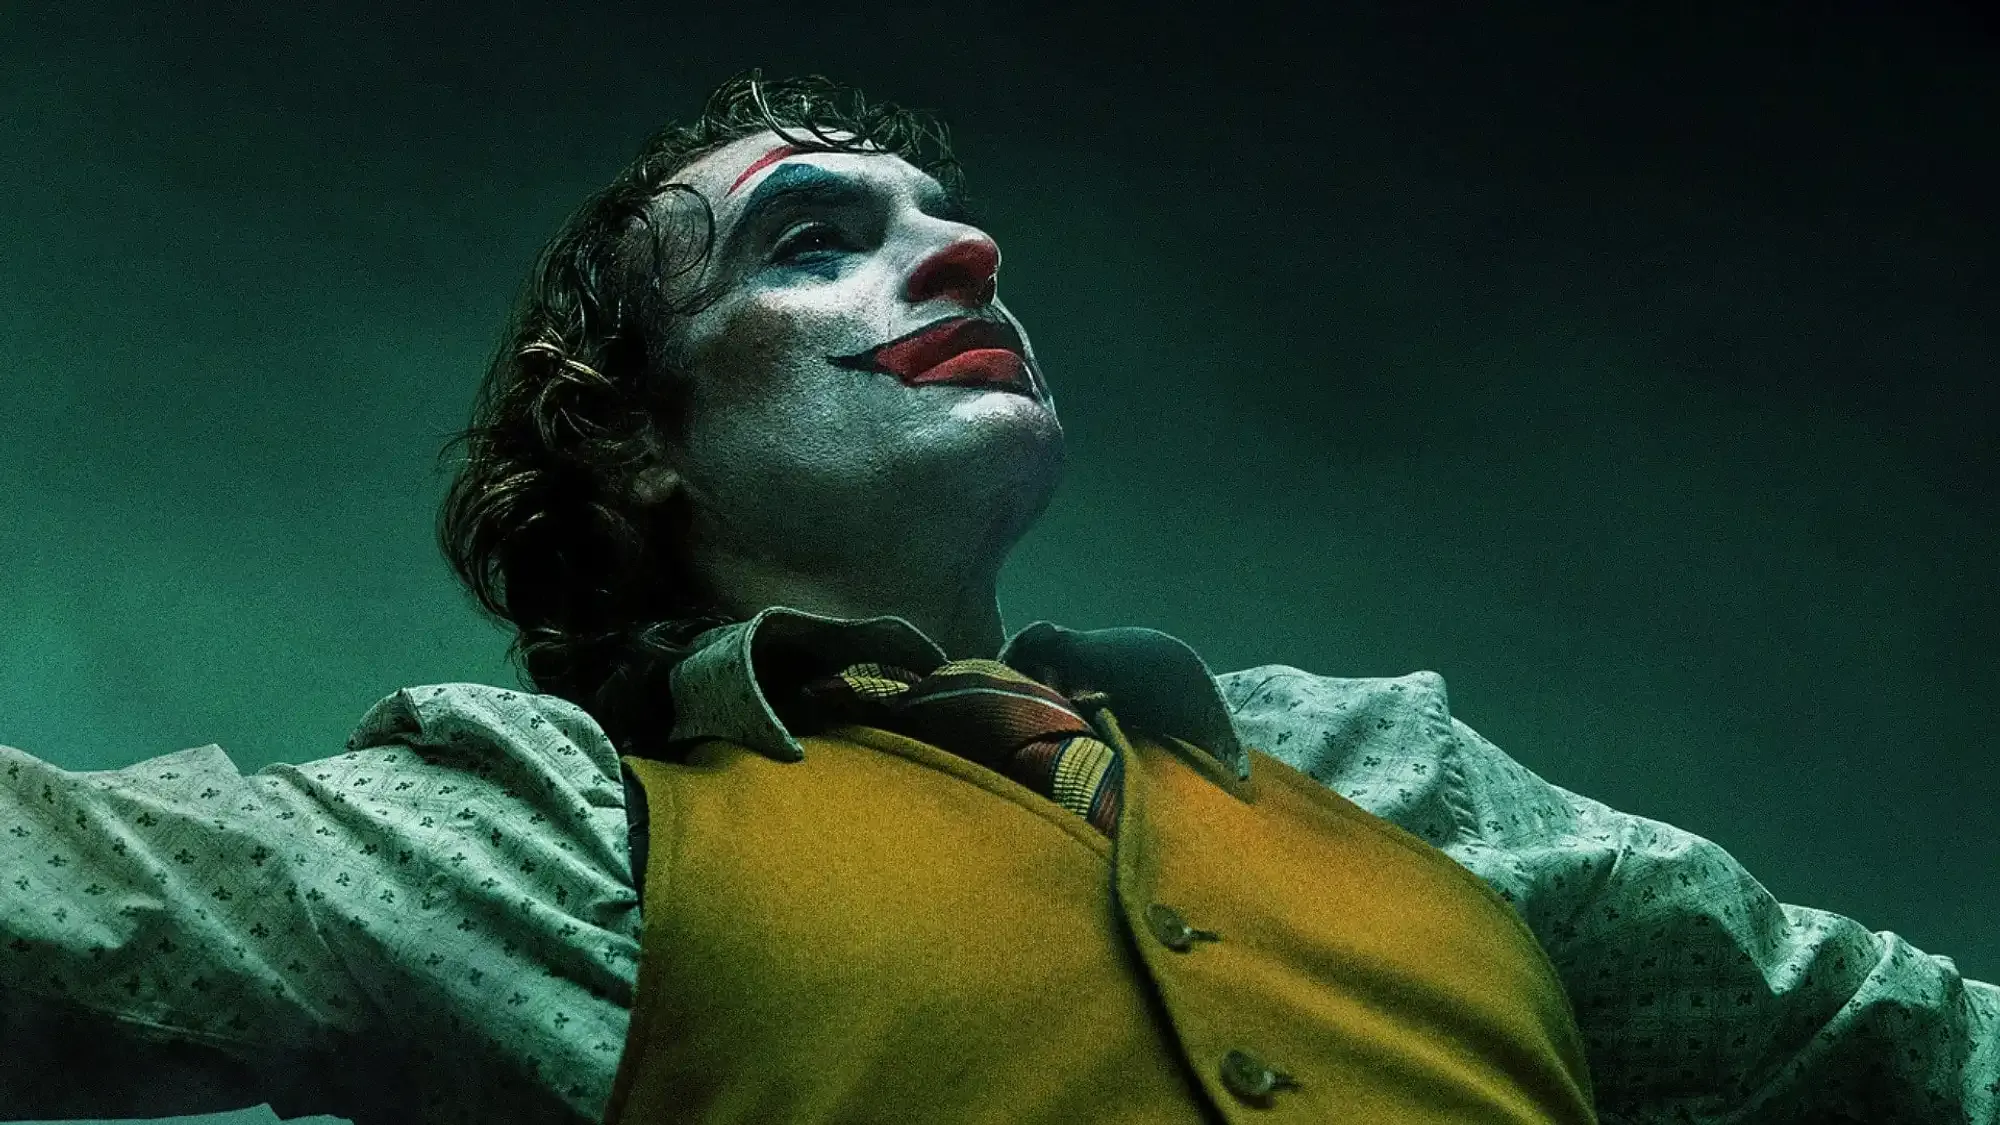 Joker movie review